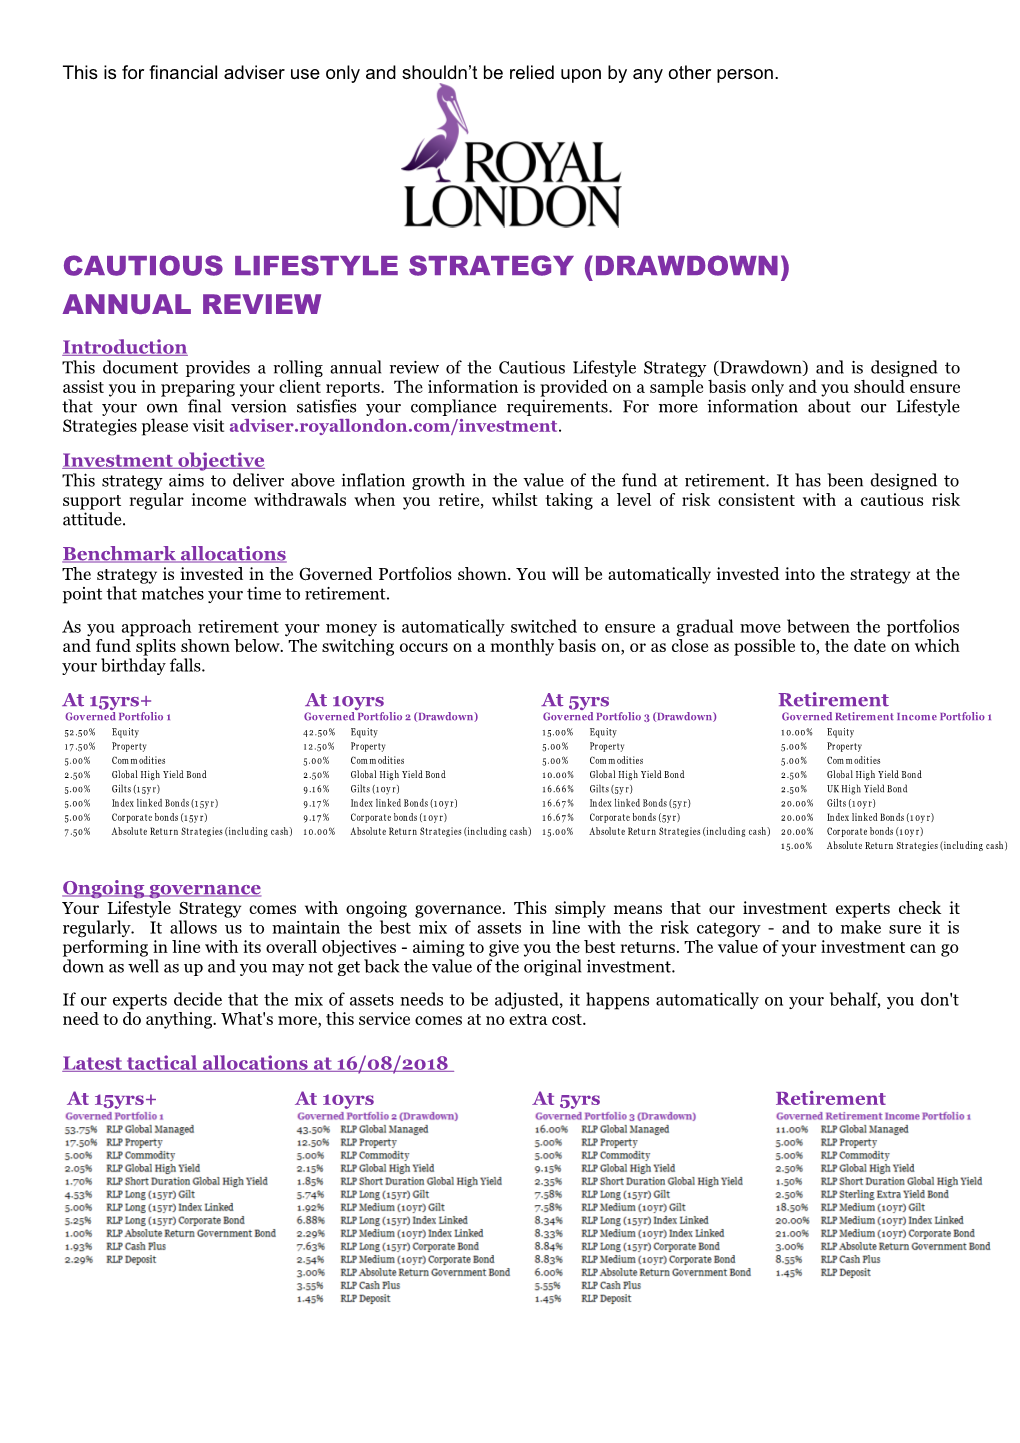 Cautious Lifestyle Strategy - Drawdown - Annual Review